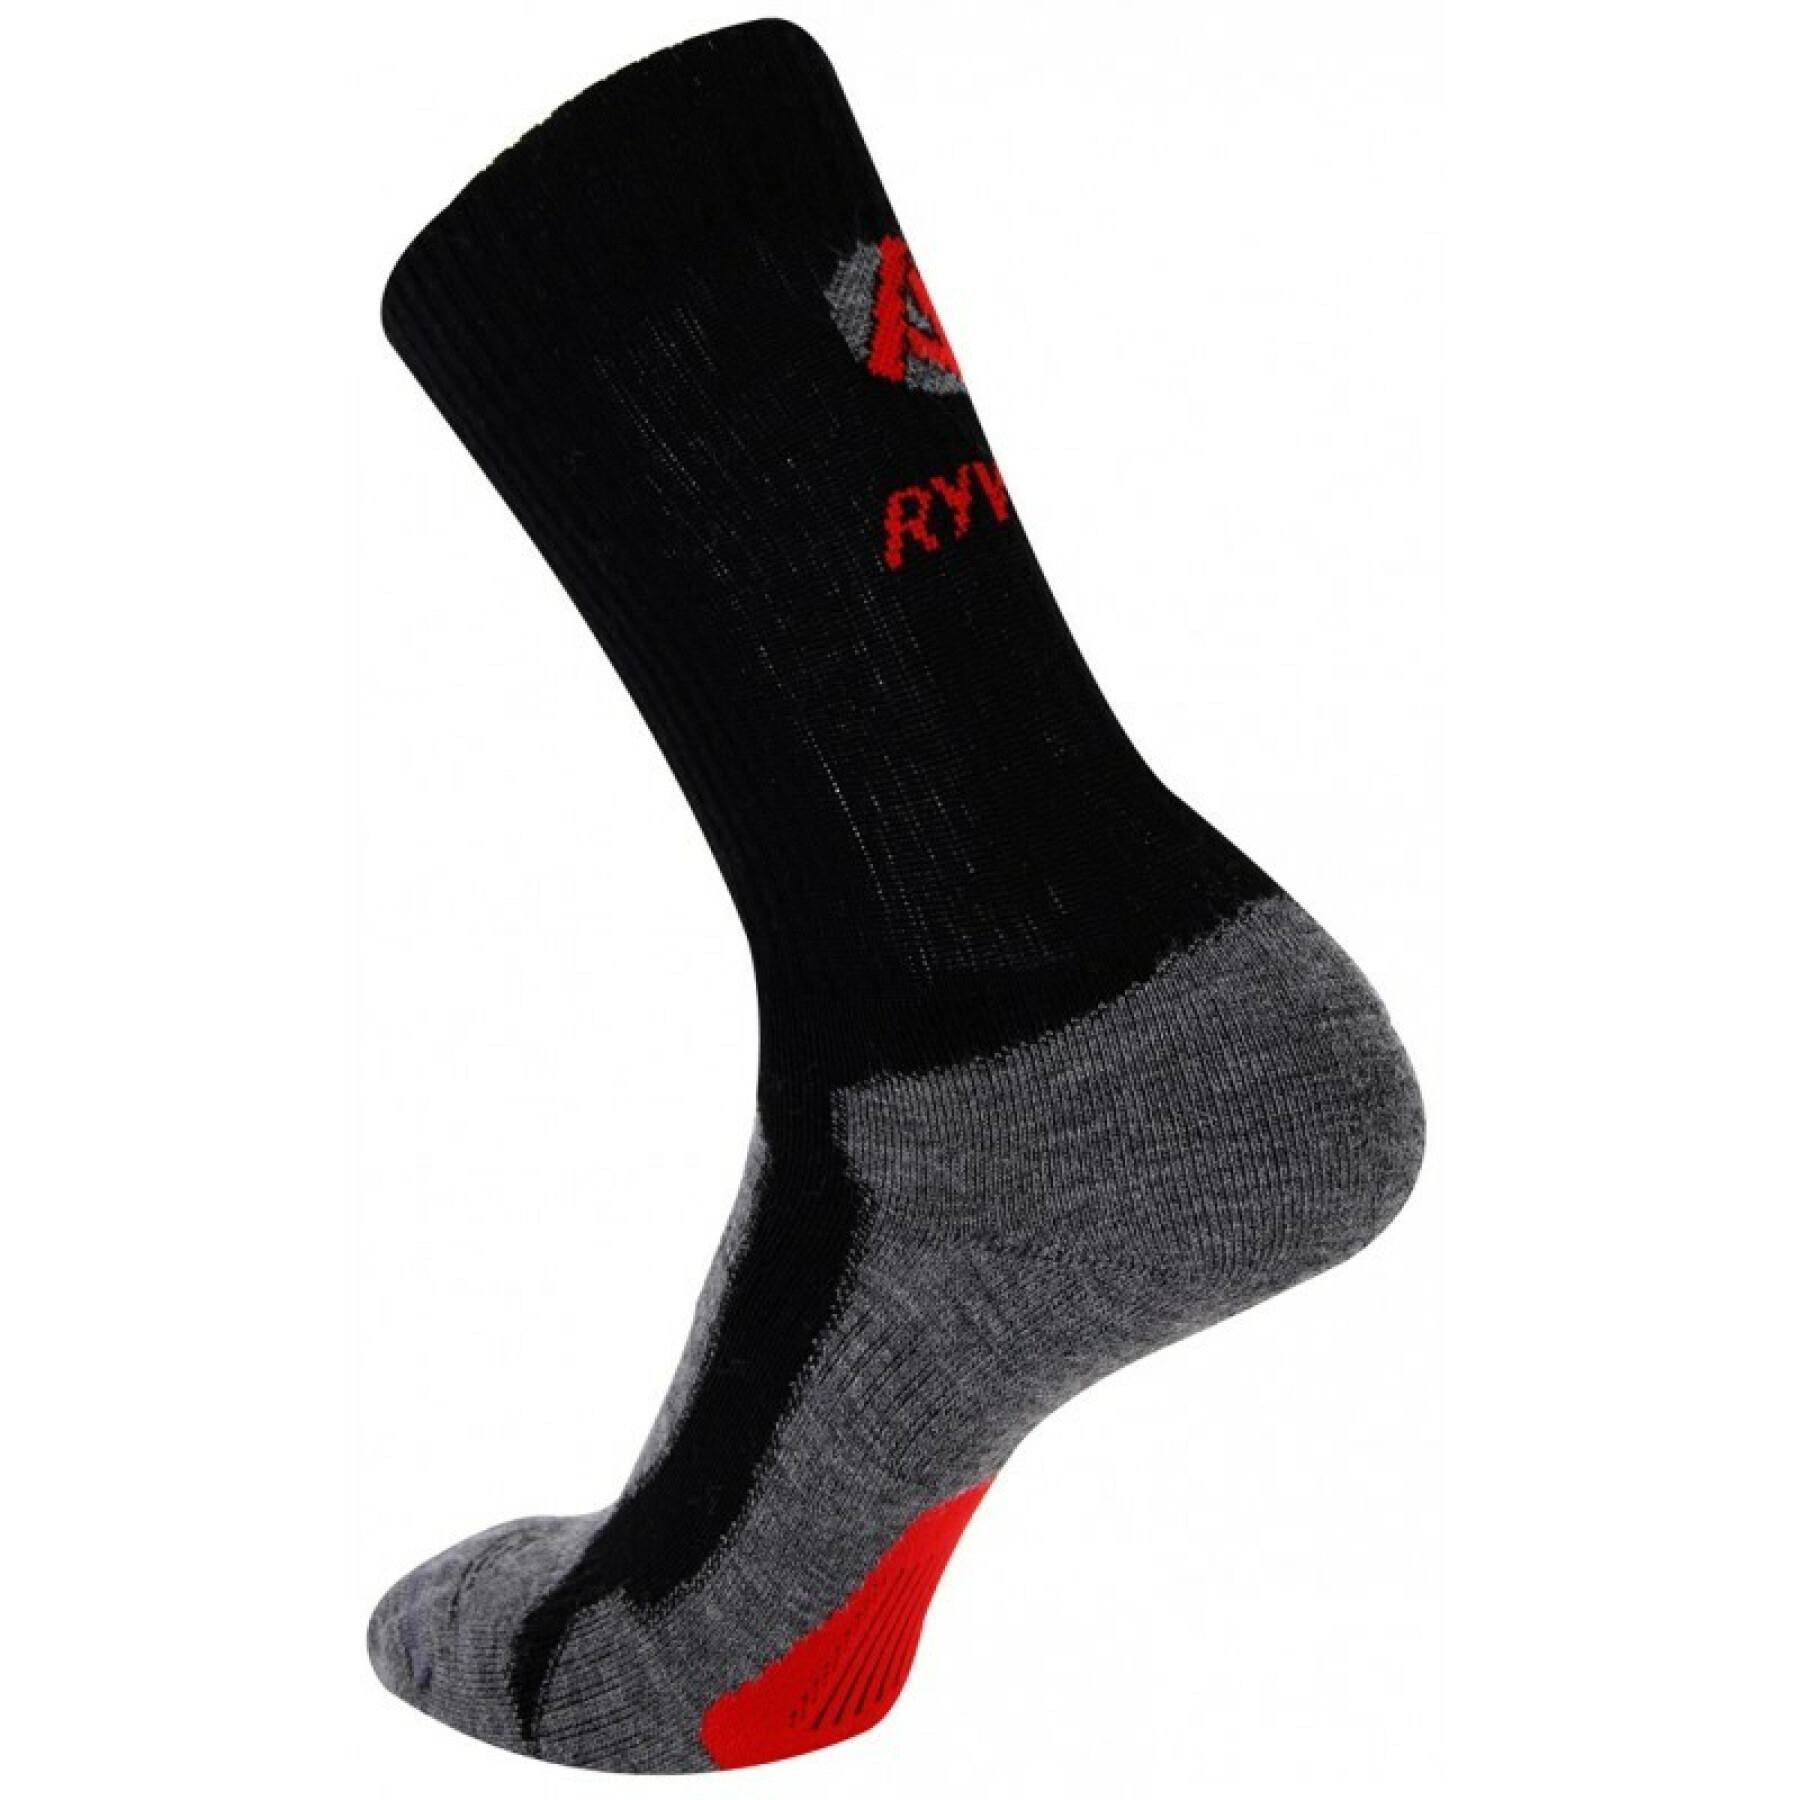 Merino socks Rywan Lanordique